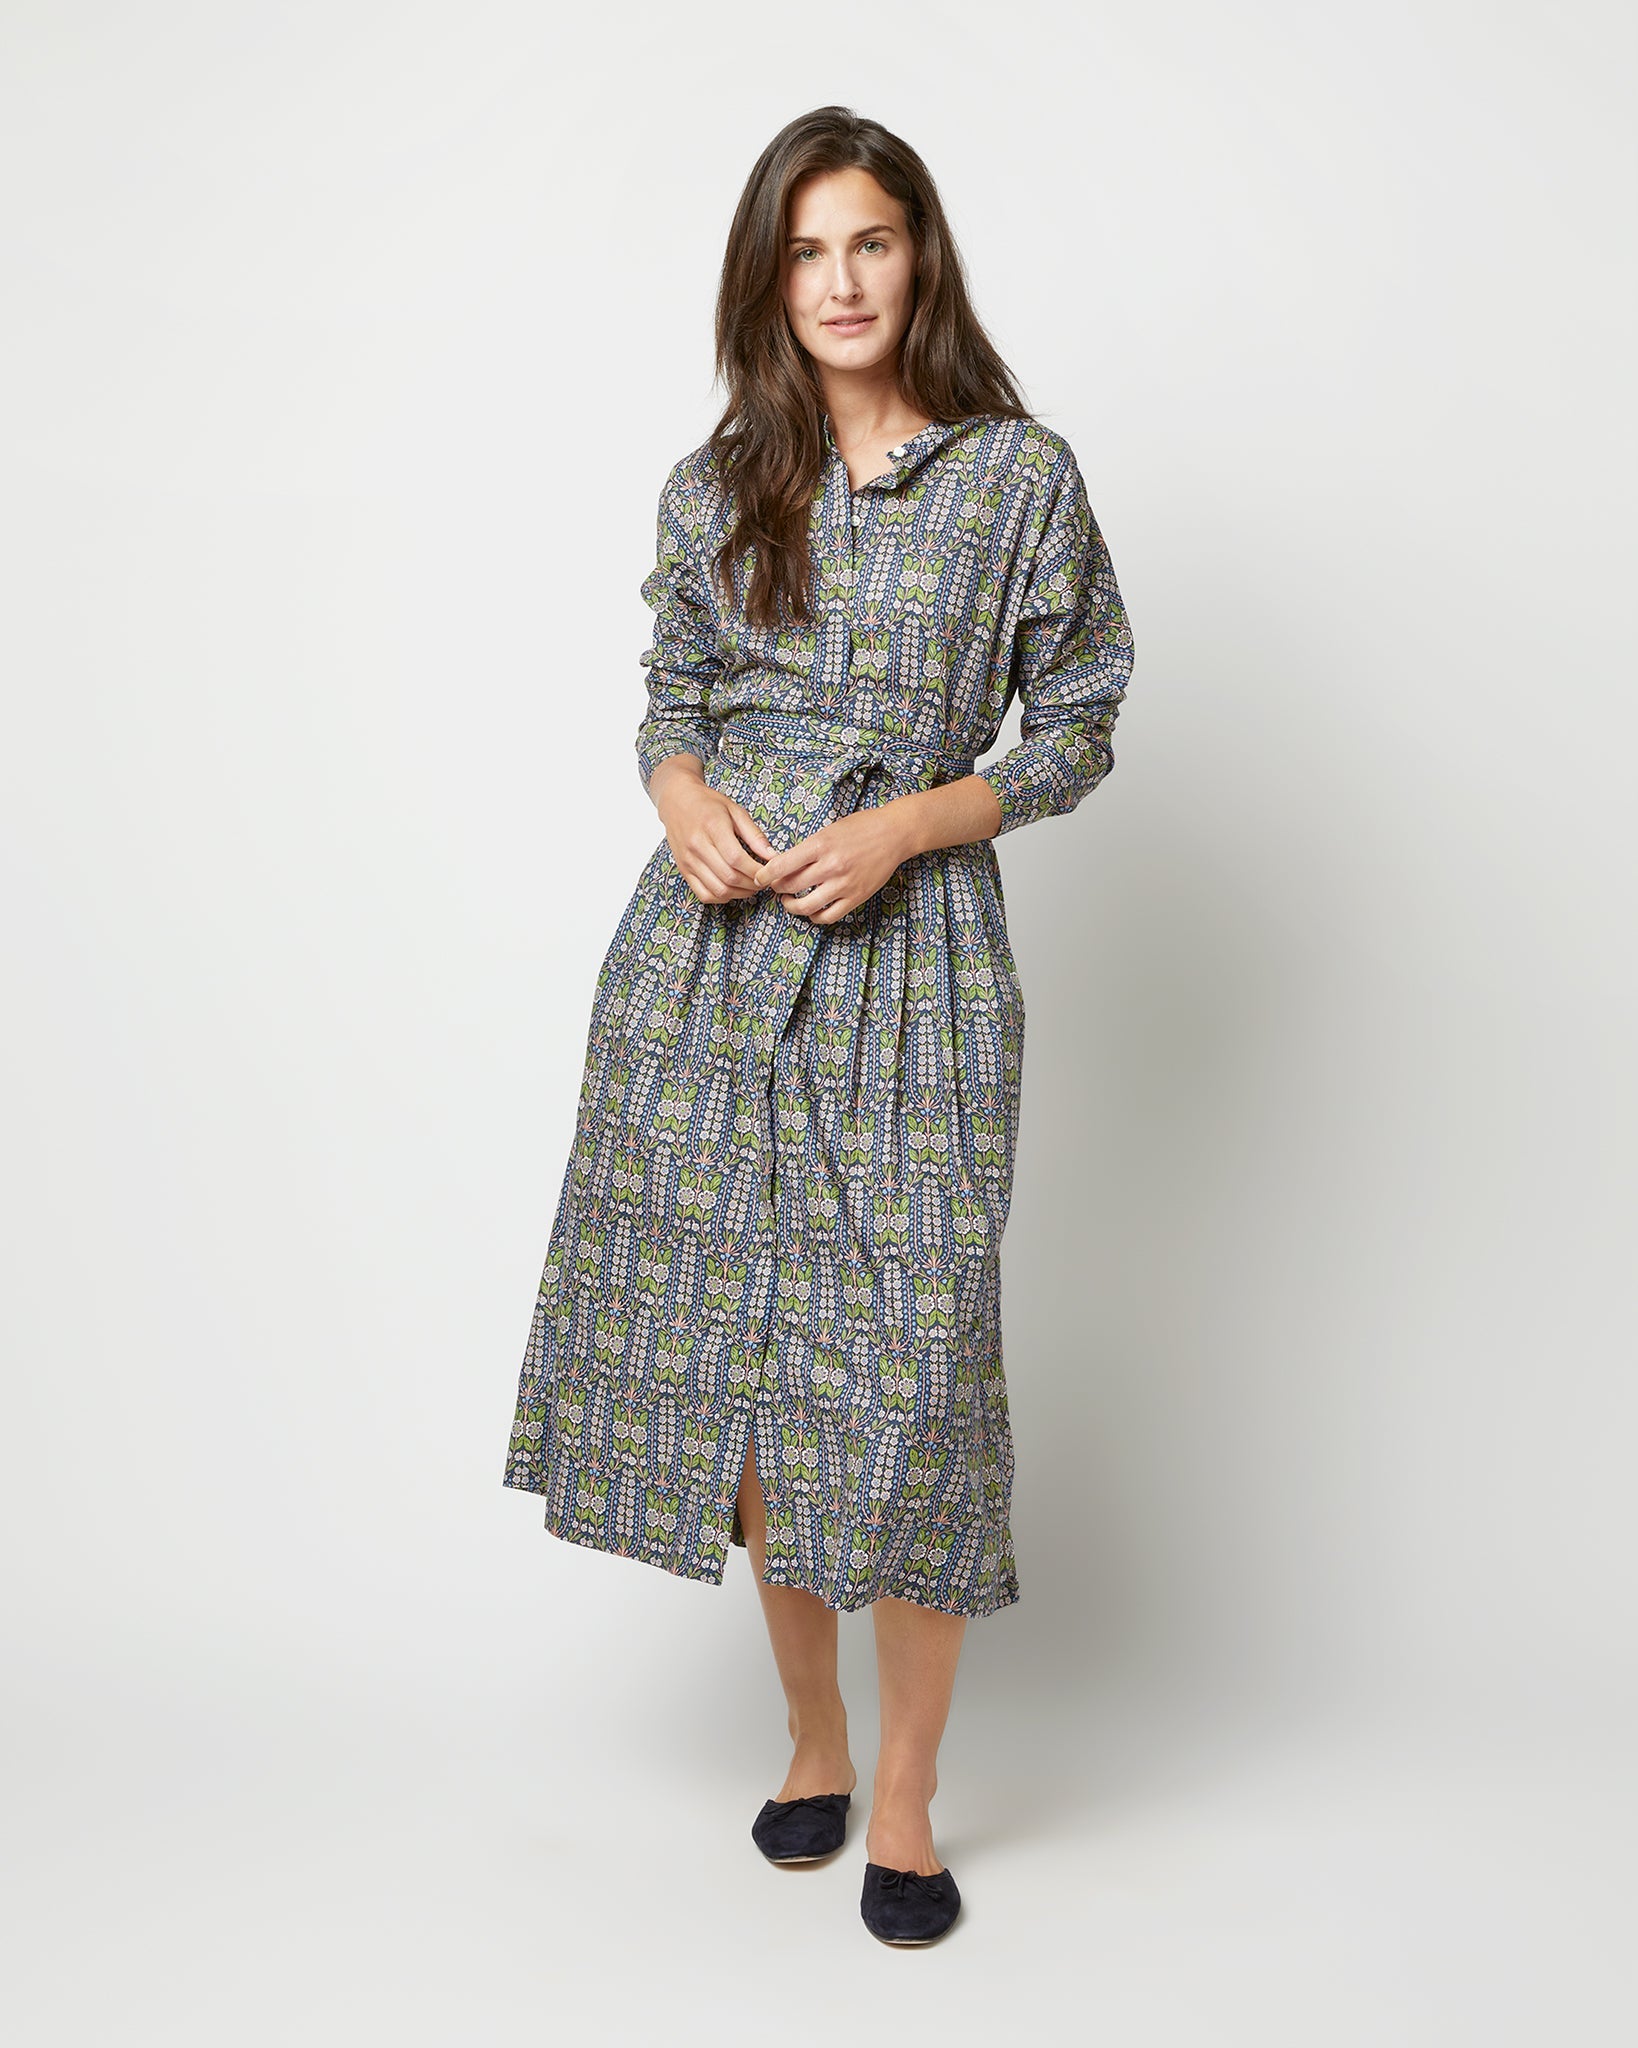 Kimono Shirtwaist Dress - Blue/Green Lindsay Garden Liberty Fabric